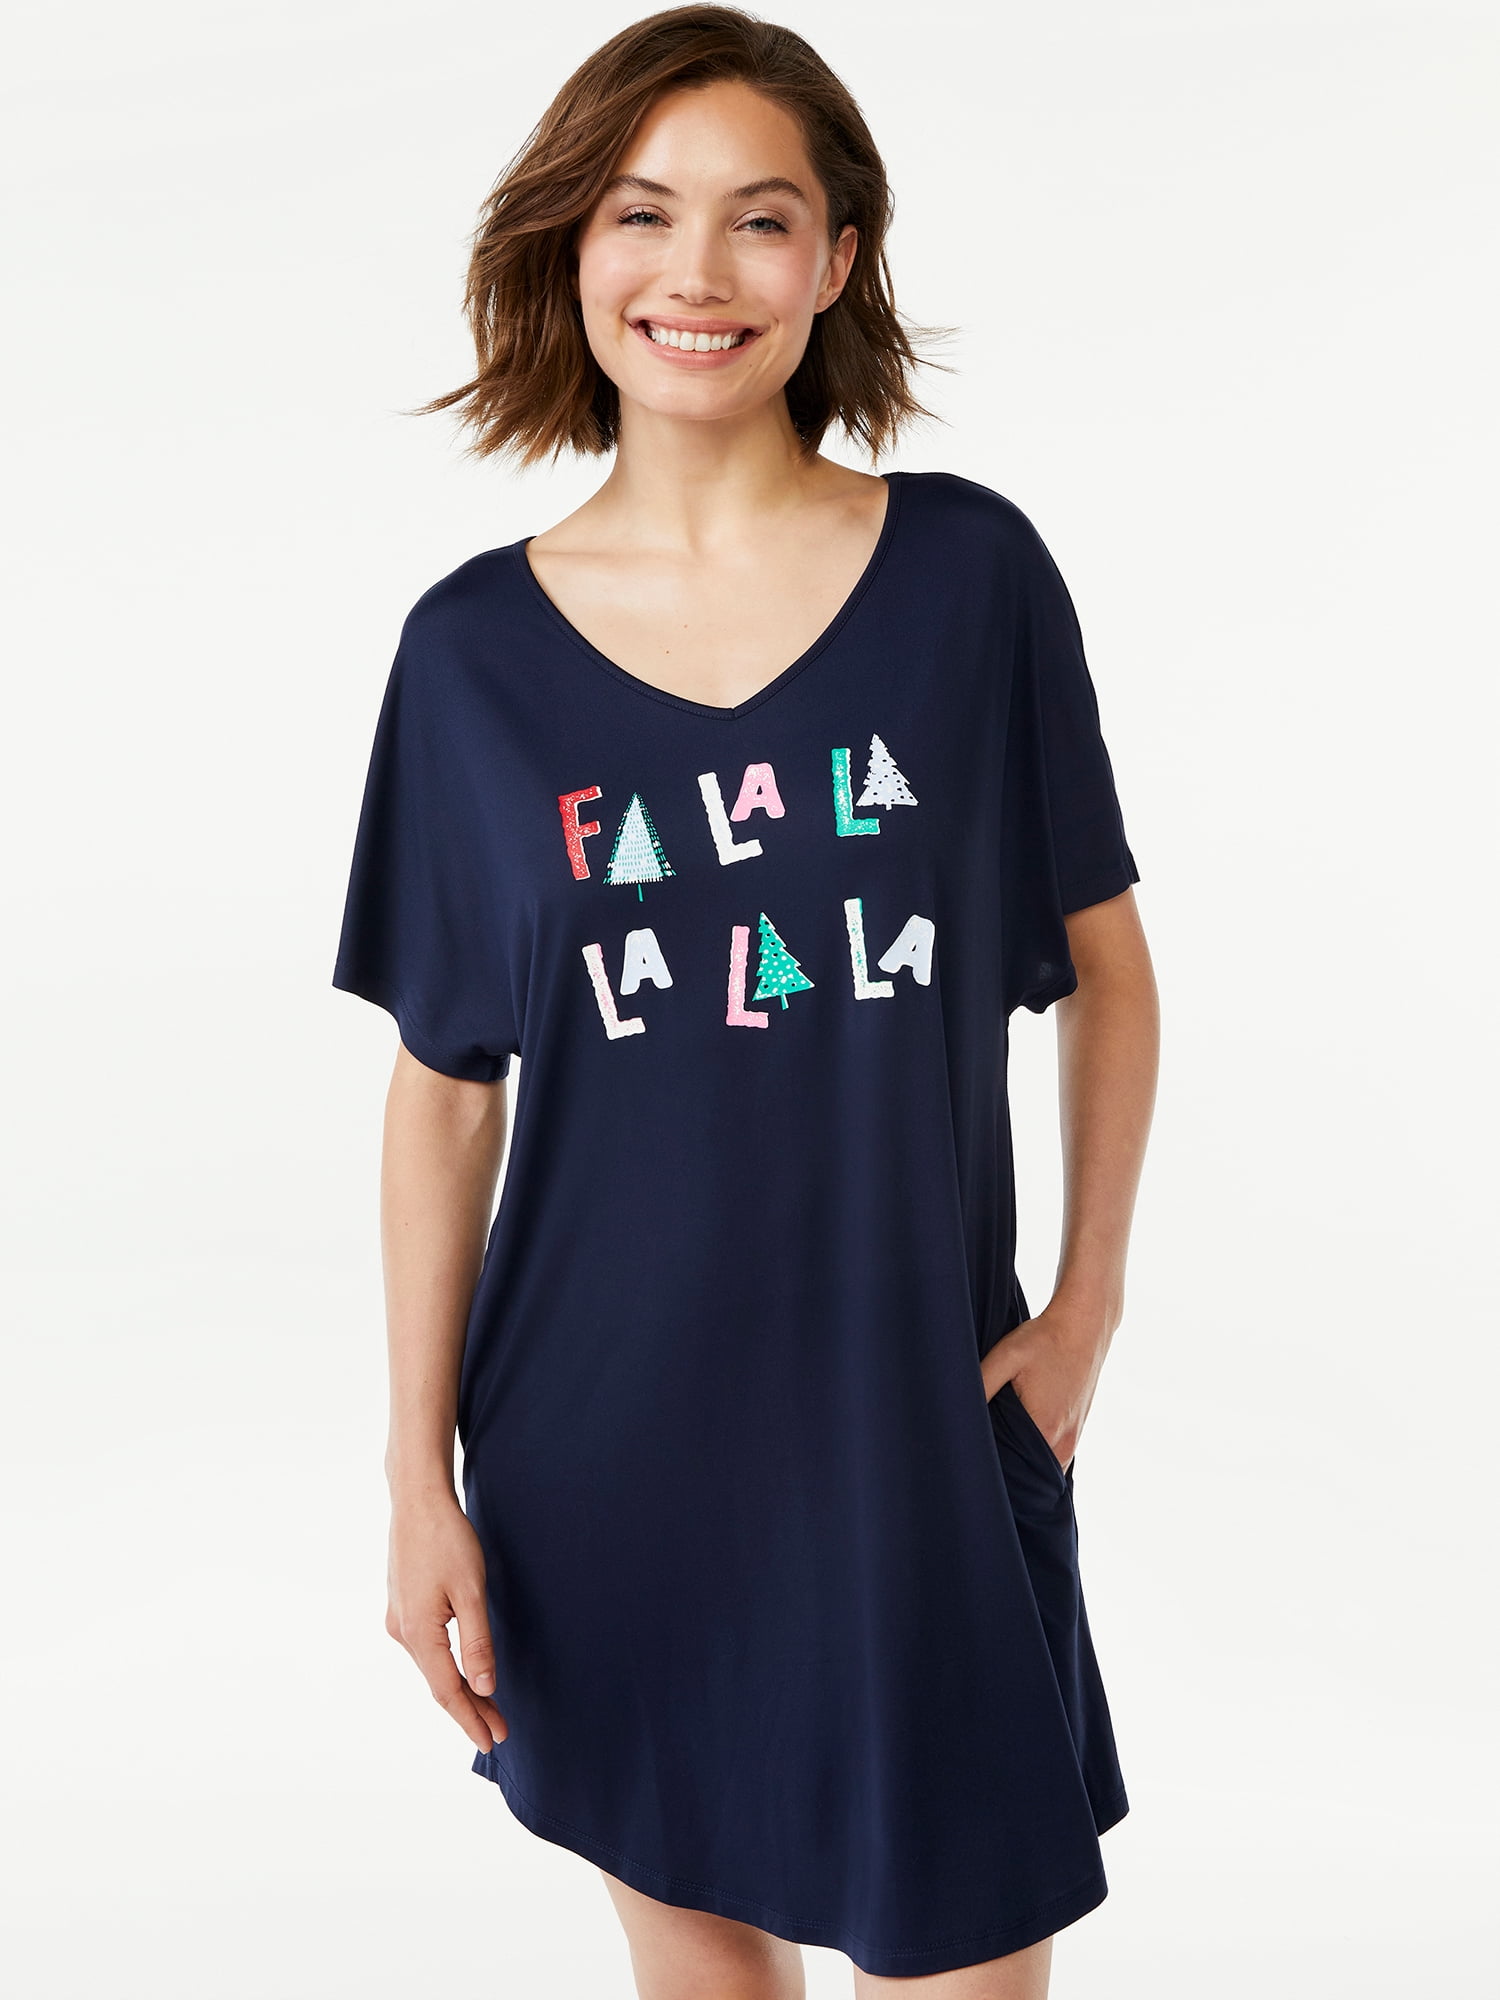 Joyspun Women's Fa La La Sleep Shirt, Sizes up to 3X